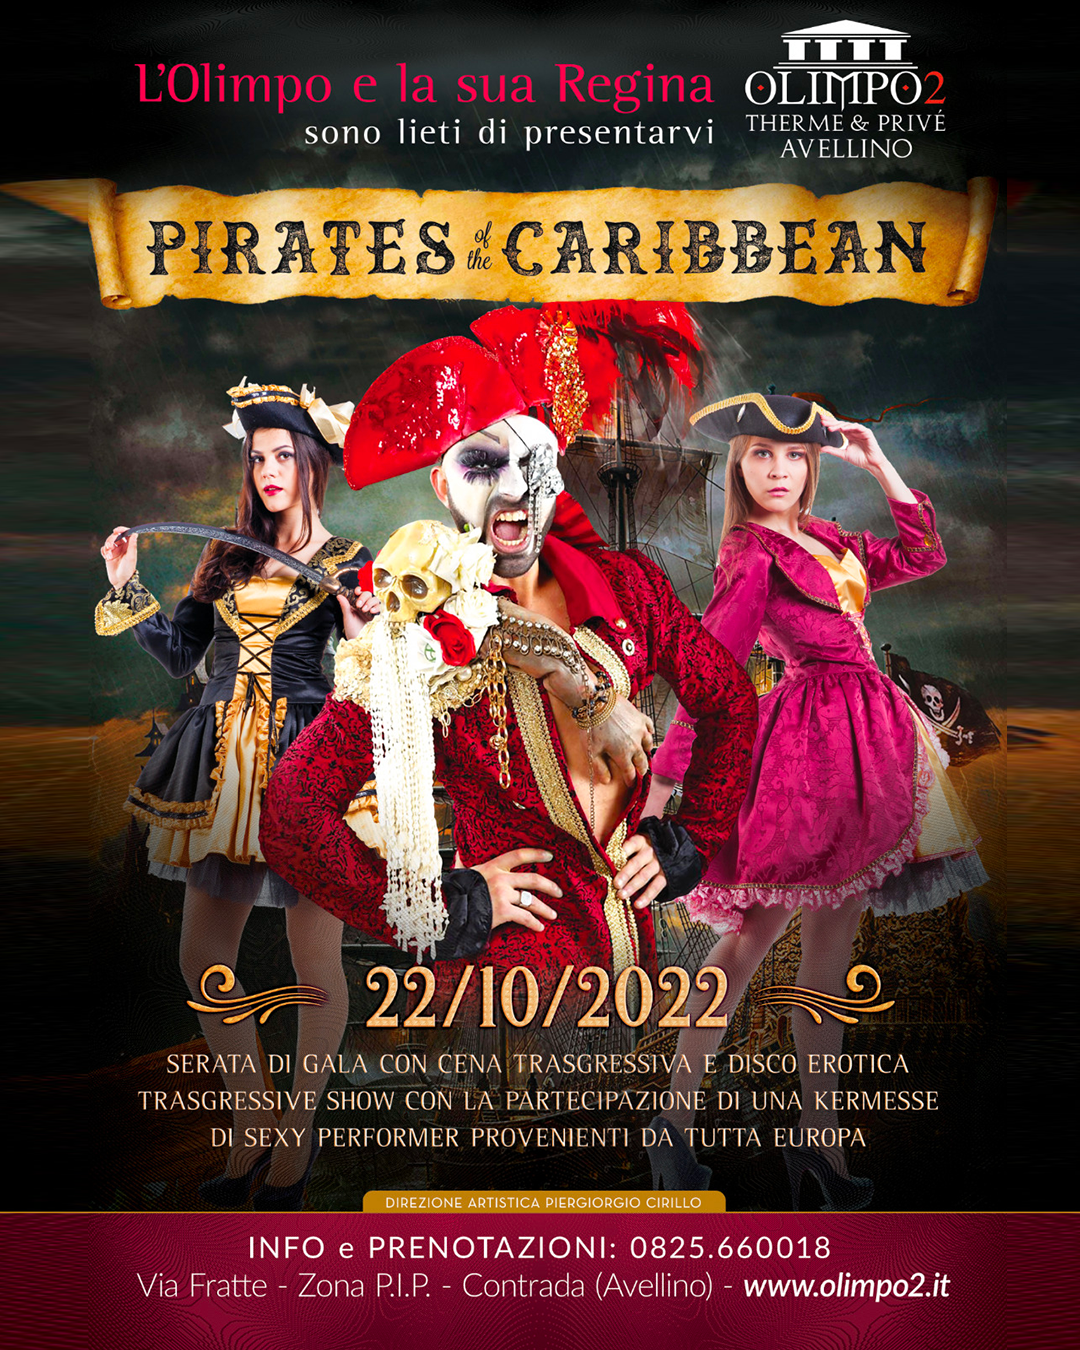 pirates of the caribbean olimpo 2 avellino